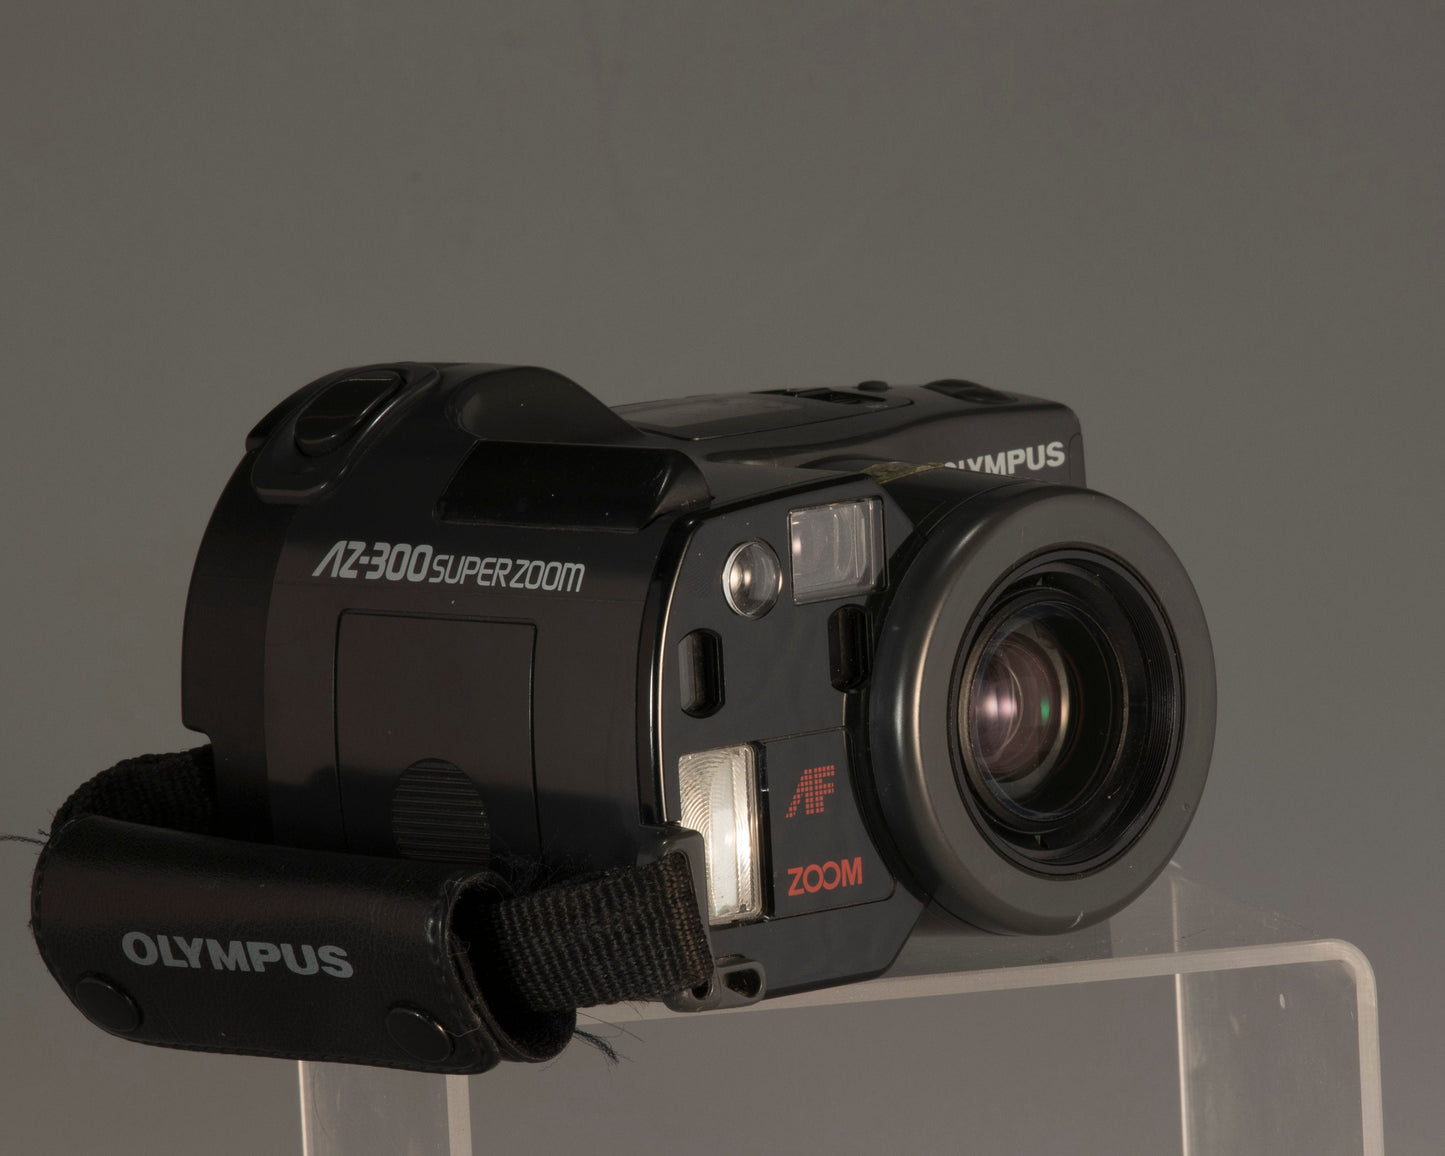 Olympus Superzoom AZ300 35mm camera